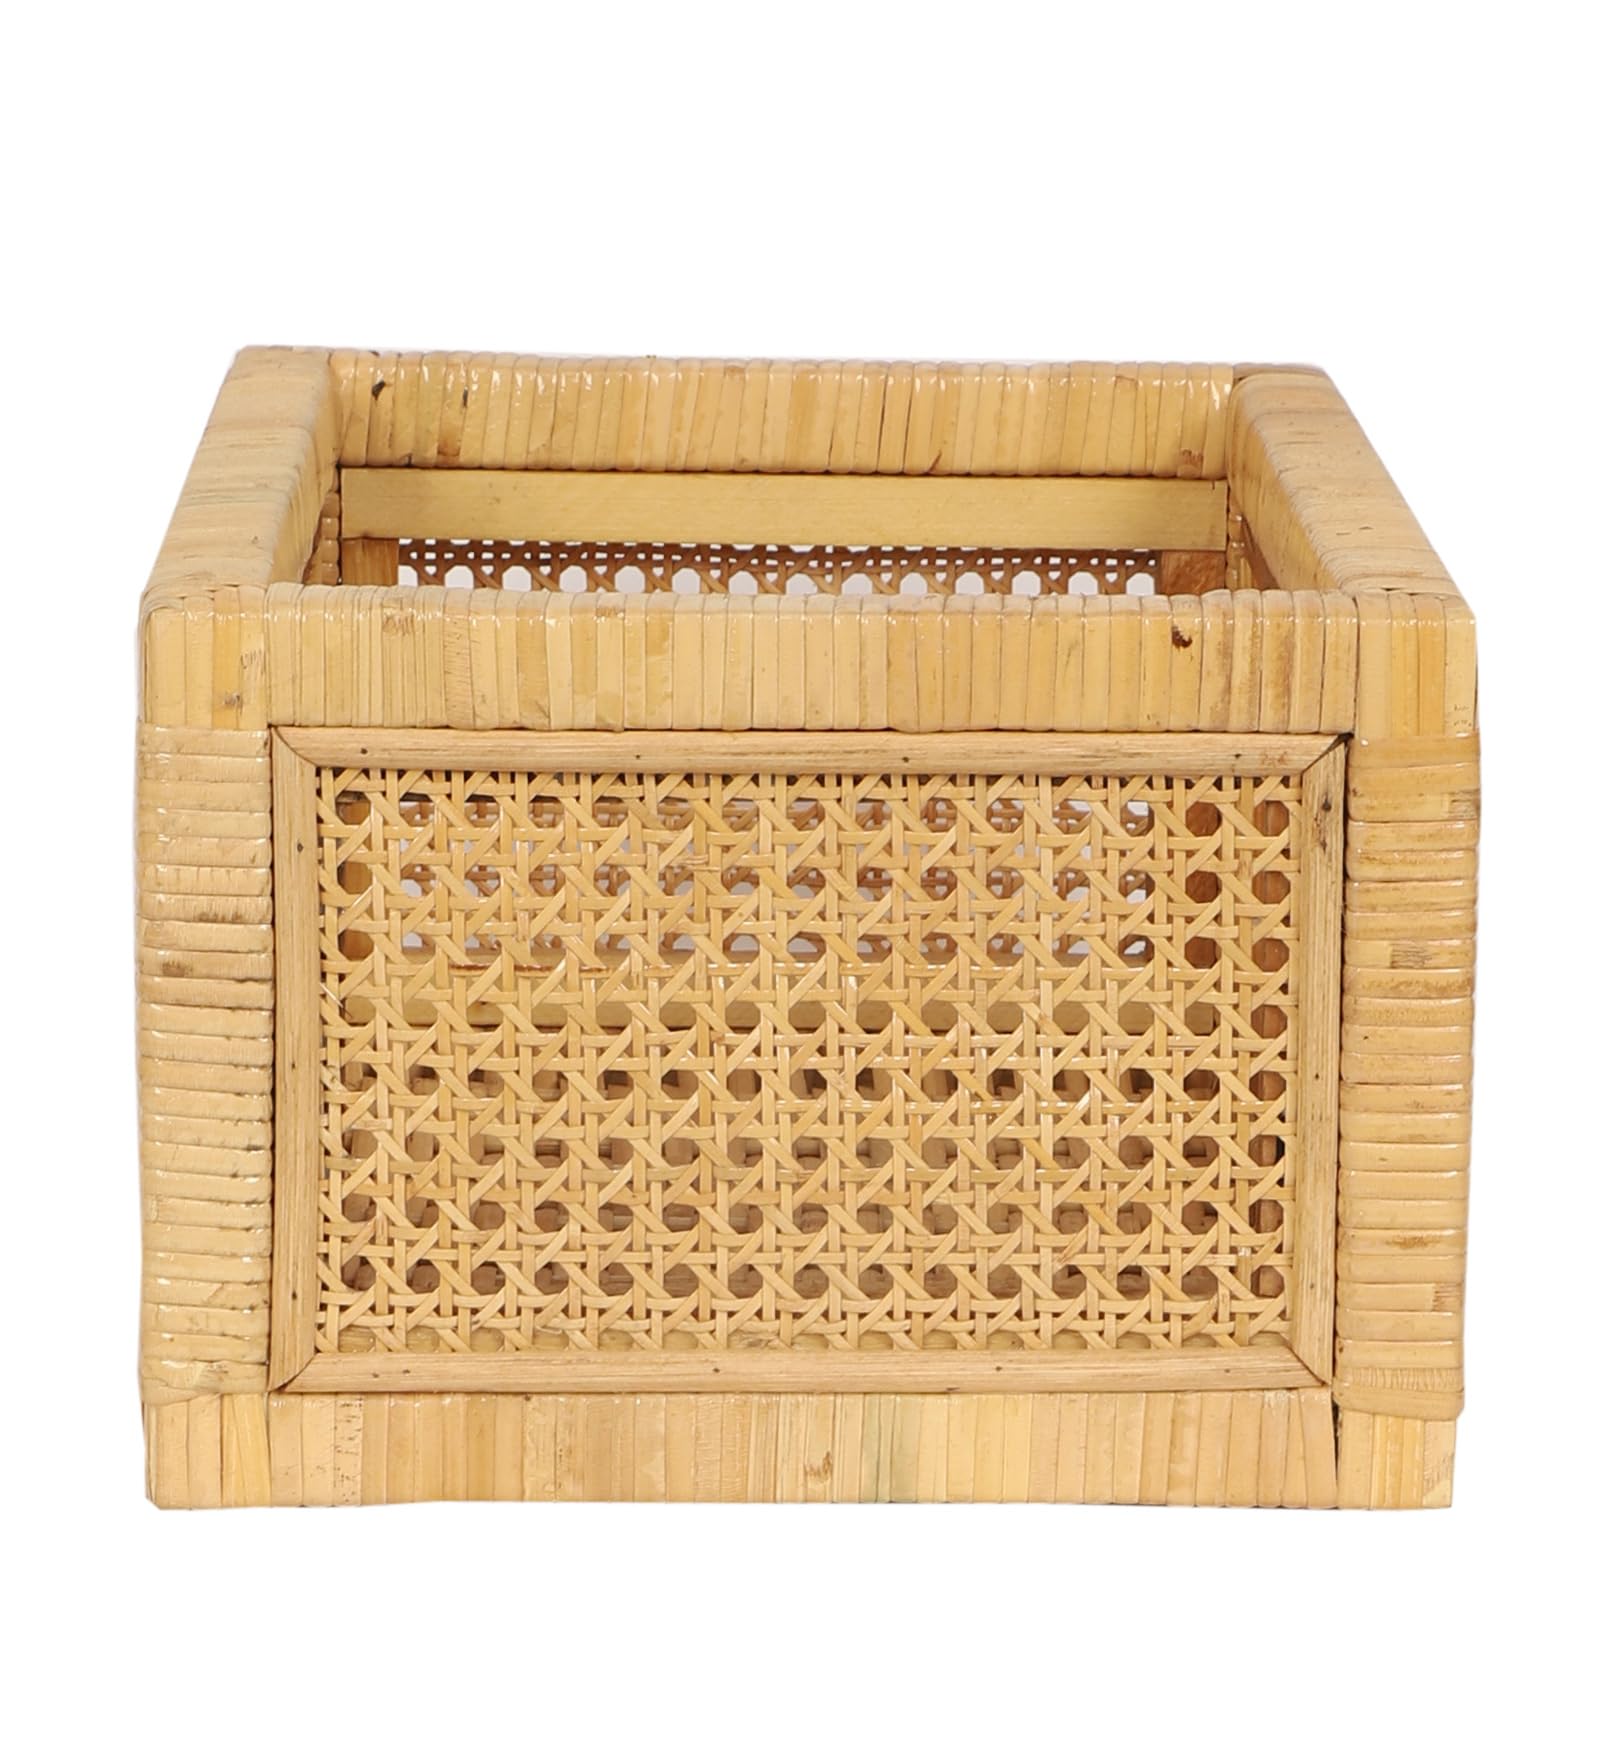 Akway Rattan cane webbing Storage basket | Wicker basket for storage organizer | Kauna Grass storage basket For Home | Kitchn Living Room - (Large, Beige)- Akway